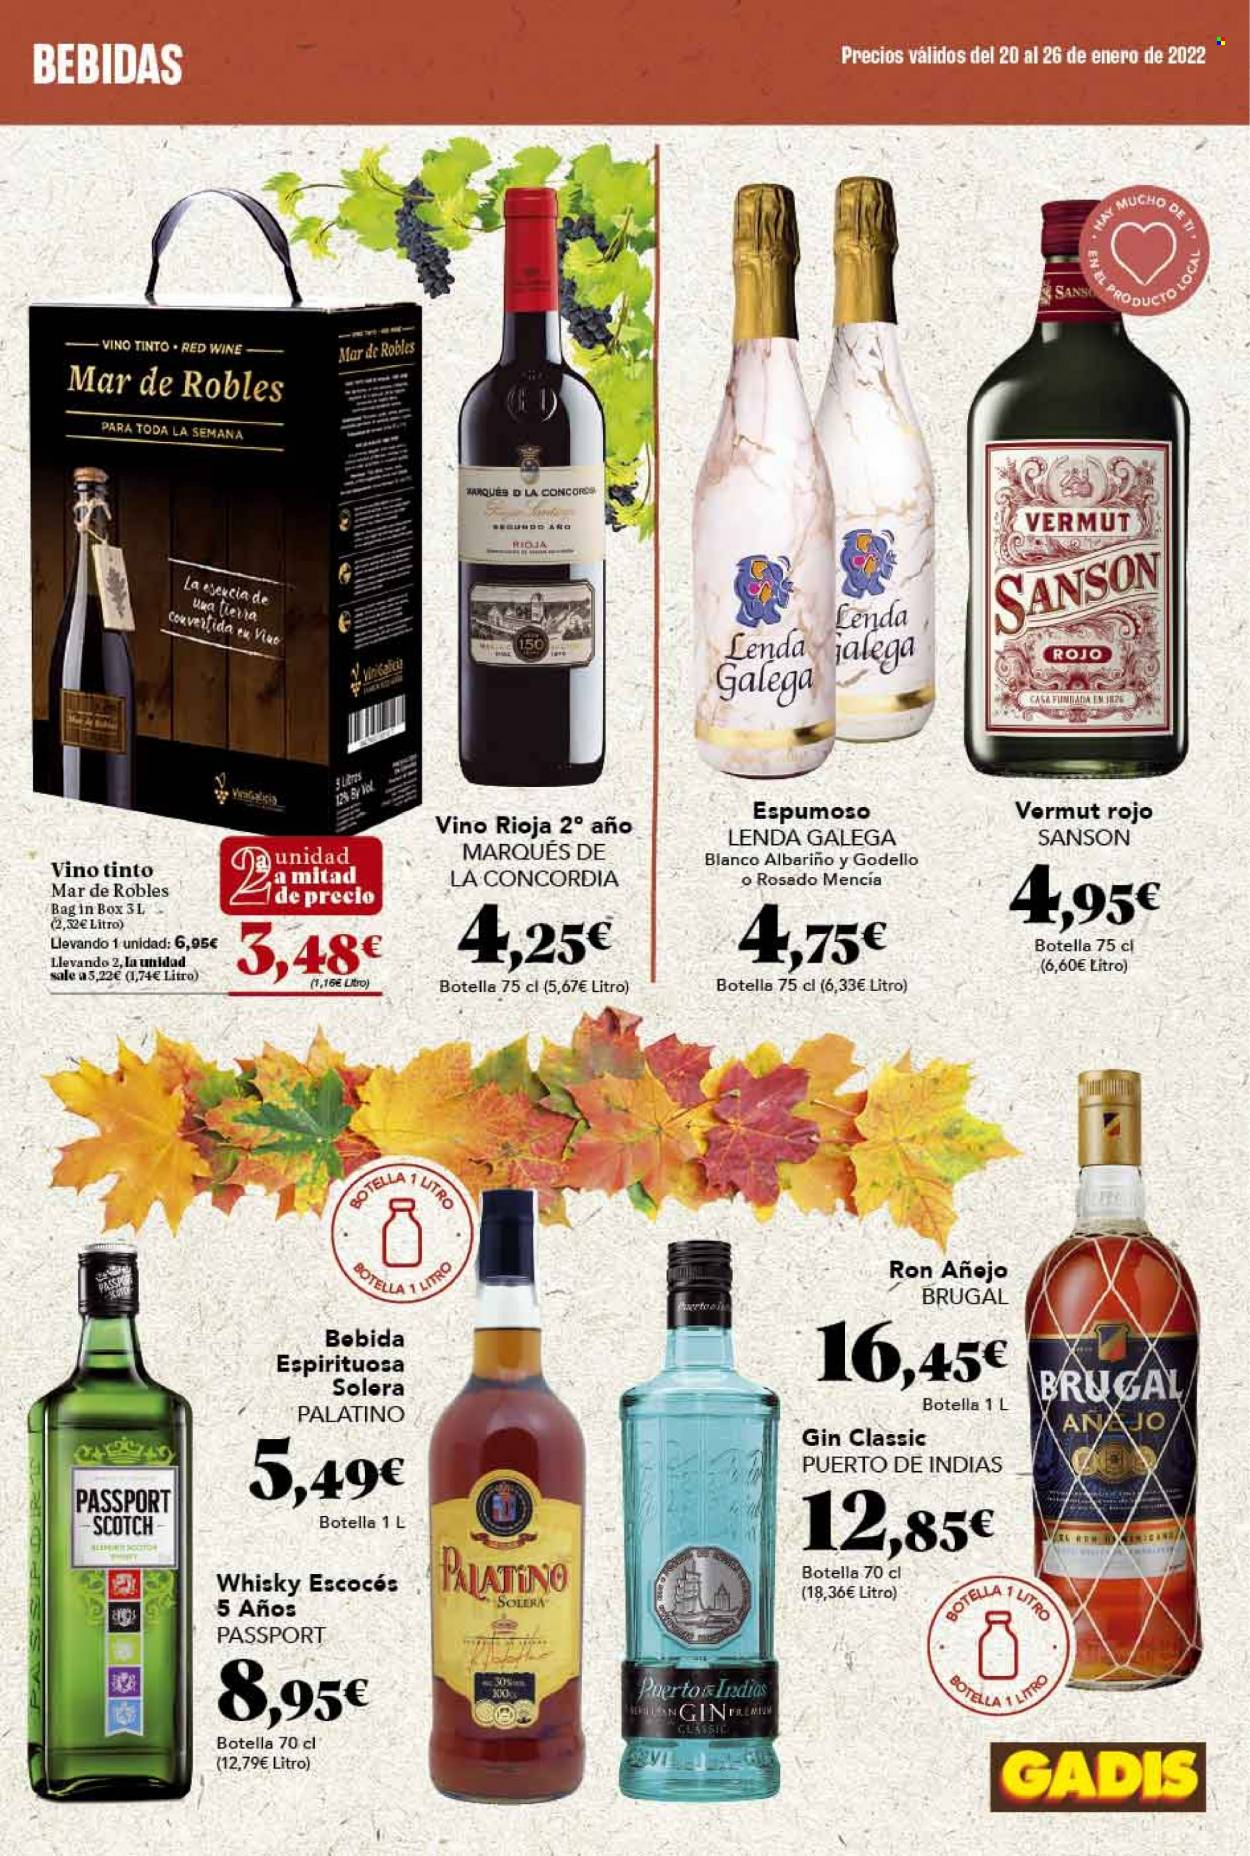 thumbnail - Folleto actual Gadis - 20/01/22 - 26/01/22 - Ventas - bebida, vino, vino tinto, Rioja, ron, Brugal, gin, whisky. Página 31.